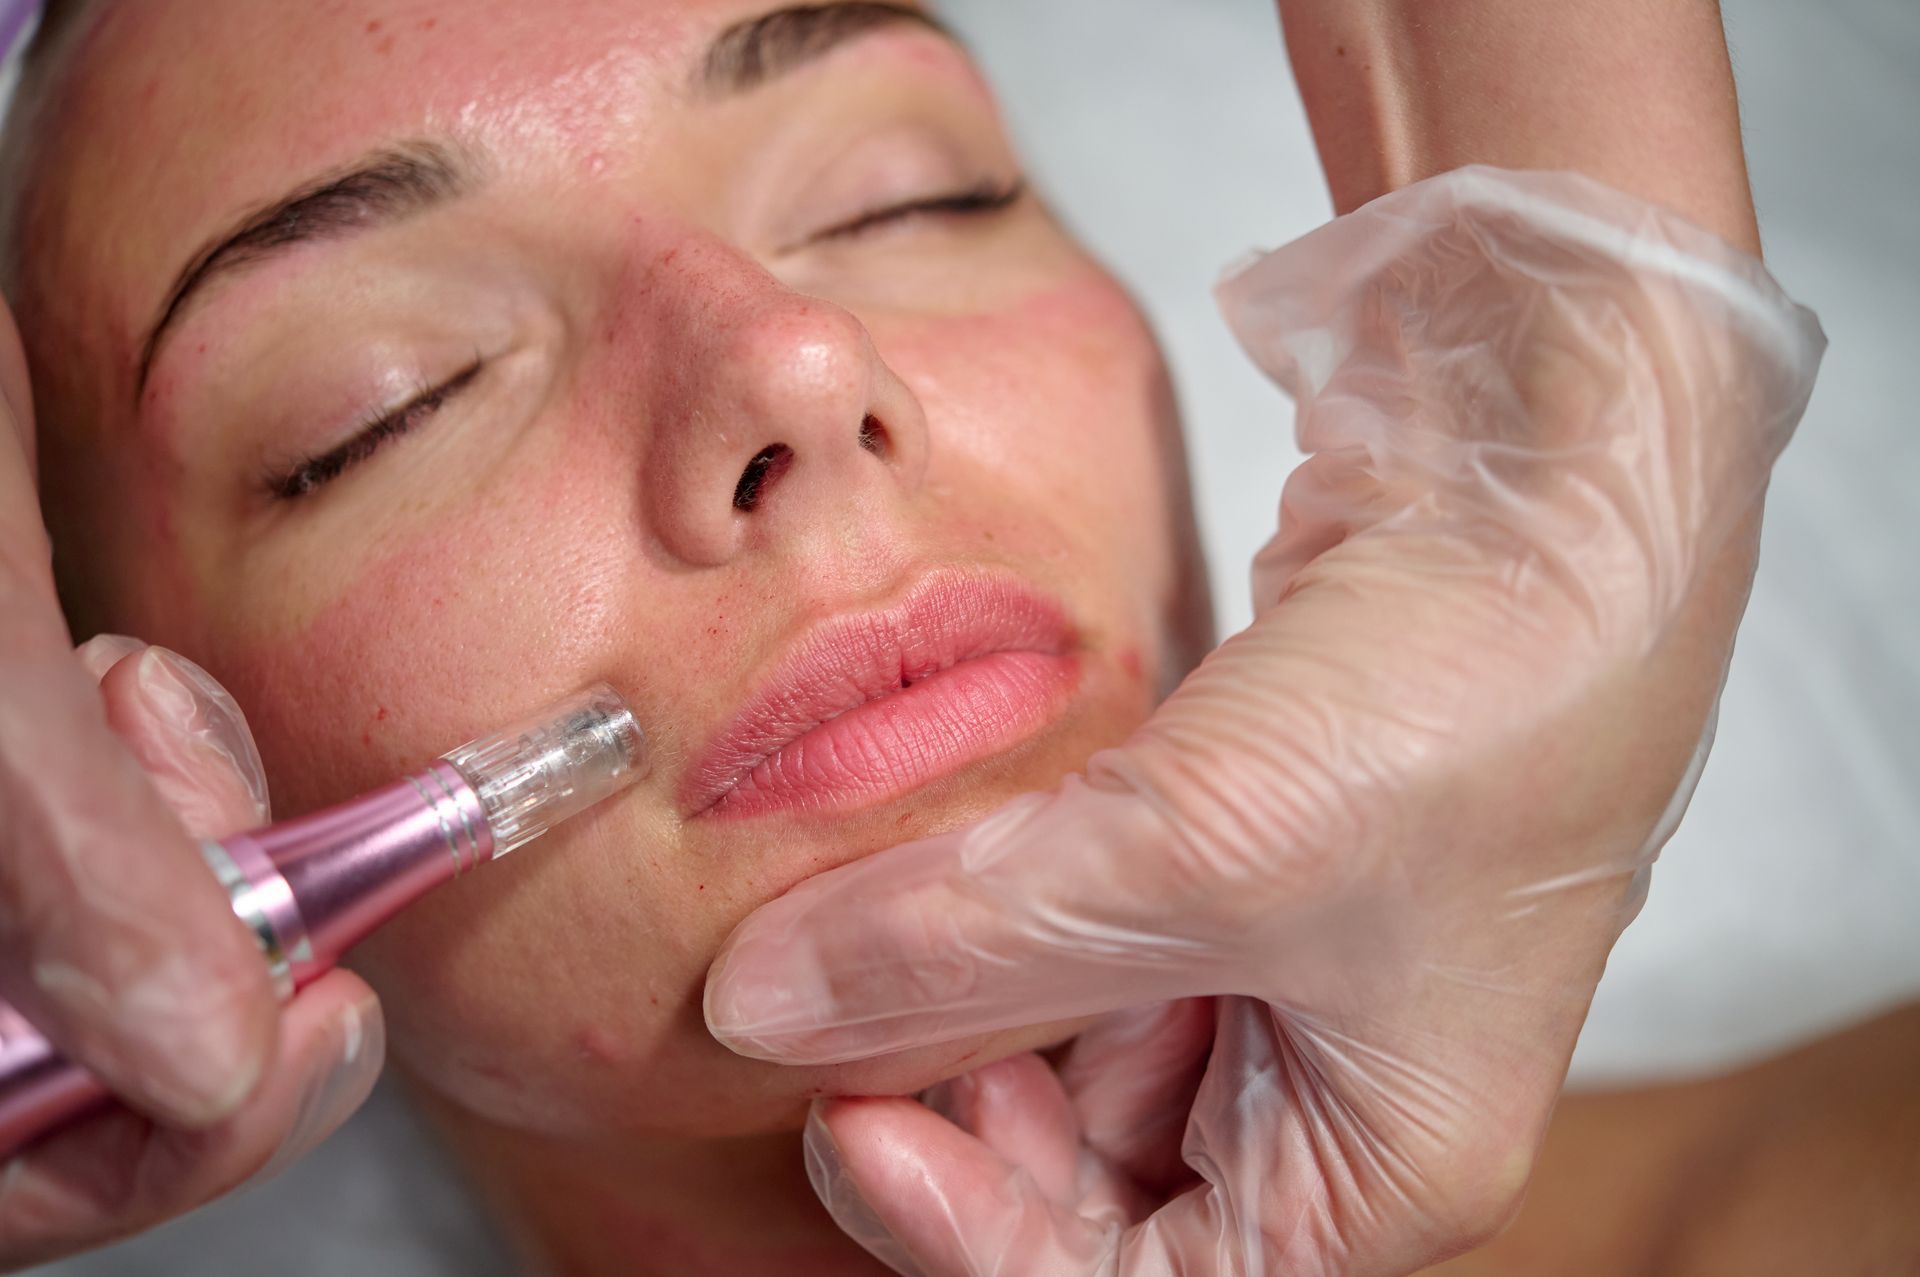 A woman faces receiving an SkinPen treatment